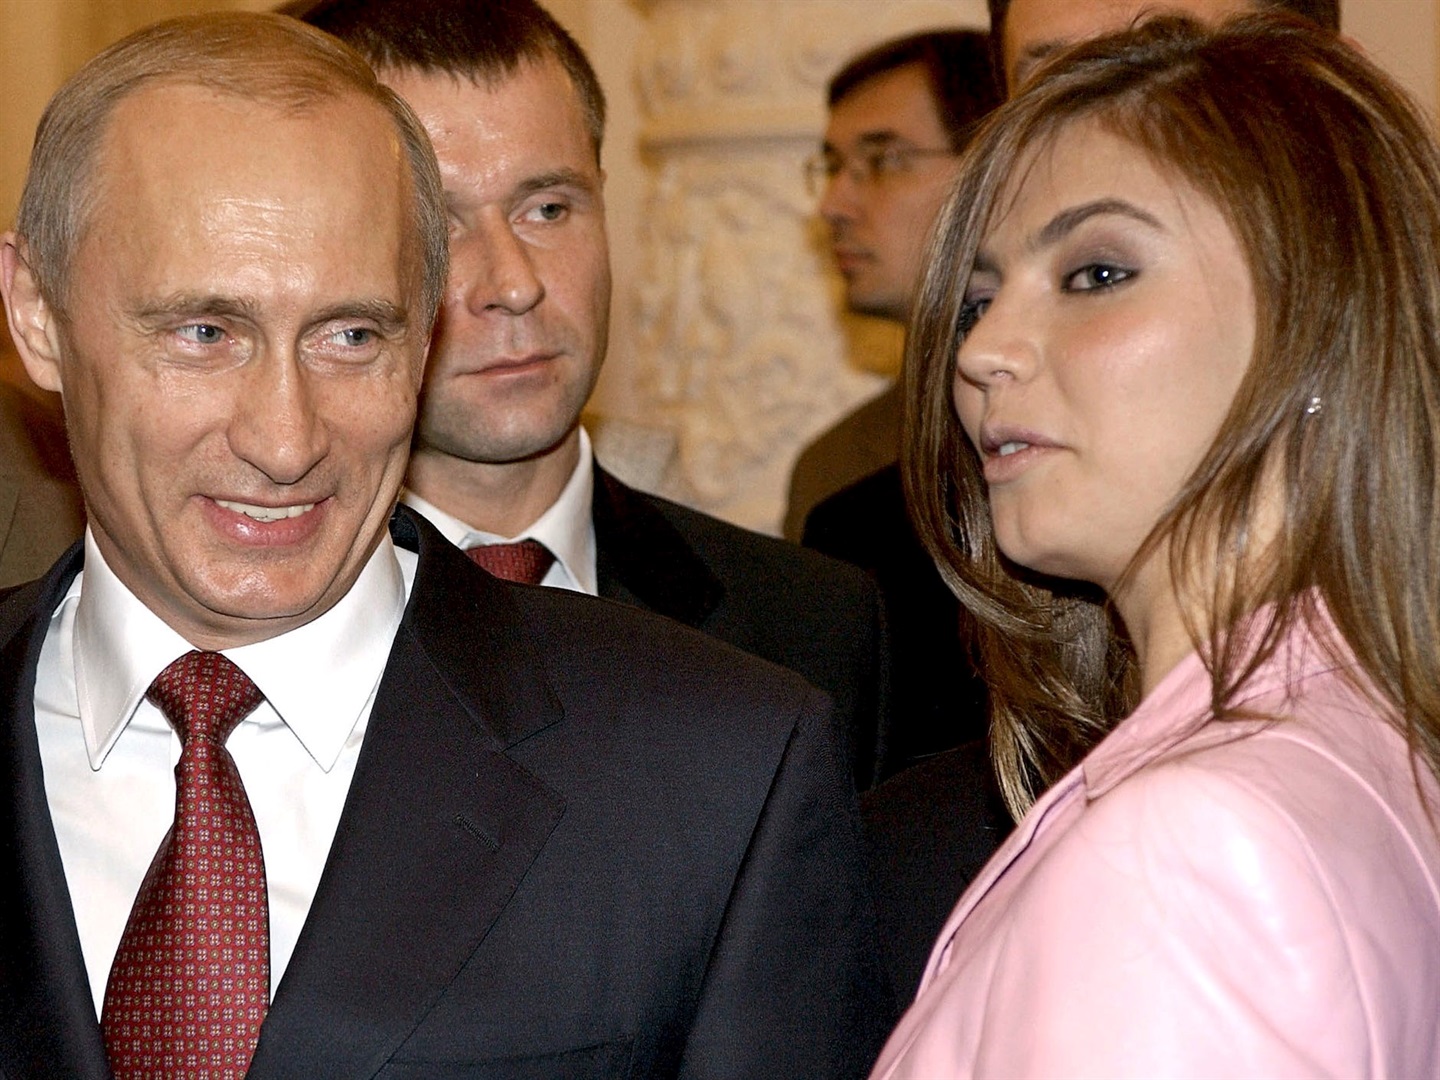 Russian President Vladimir Putin (L) smiles next to Russian gymnast Alina Kabaeva in 2004. REUTERS/ITAR-TASS/PRESIDENTIAL PRESS SERVICE